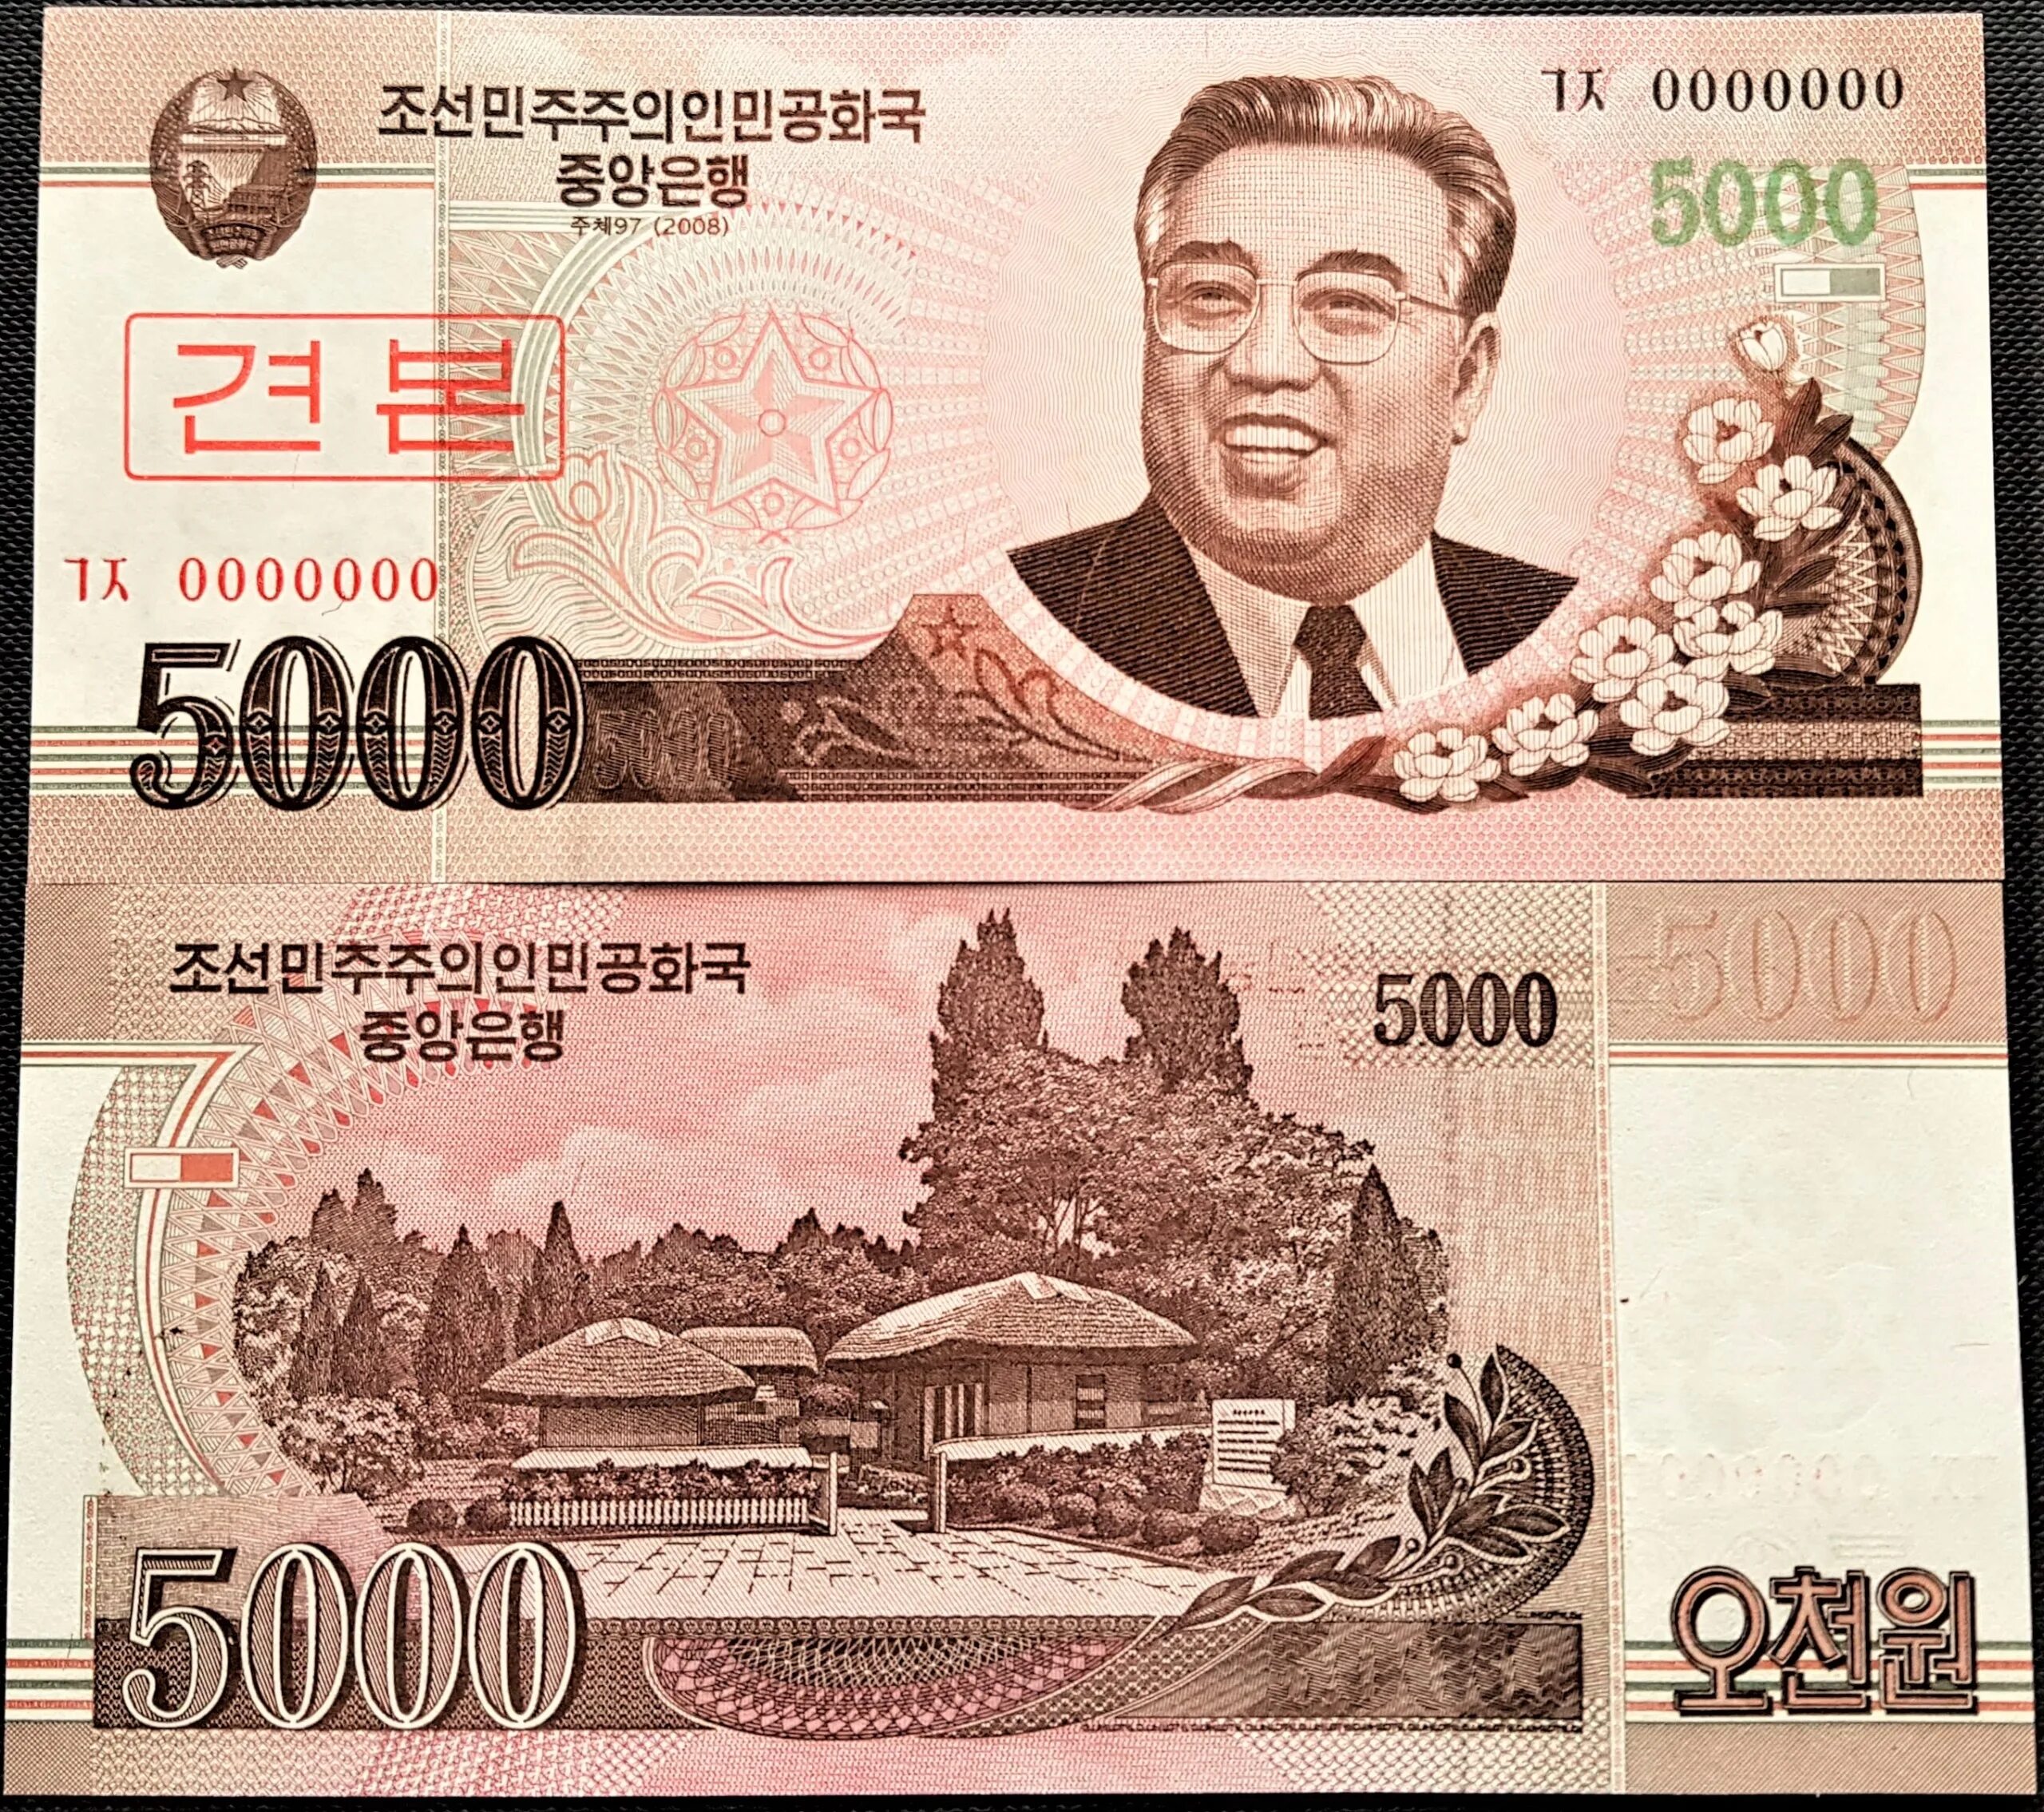 59000 вон в рублях. 5000 Корейских вон. Купюра Северная Корея 5000 вон 2013. Банкноты Кореи 5000. Северная Корея 5000 вон 2019.